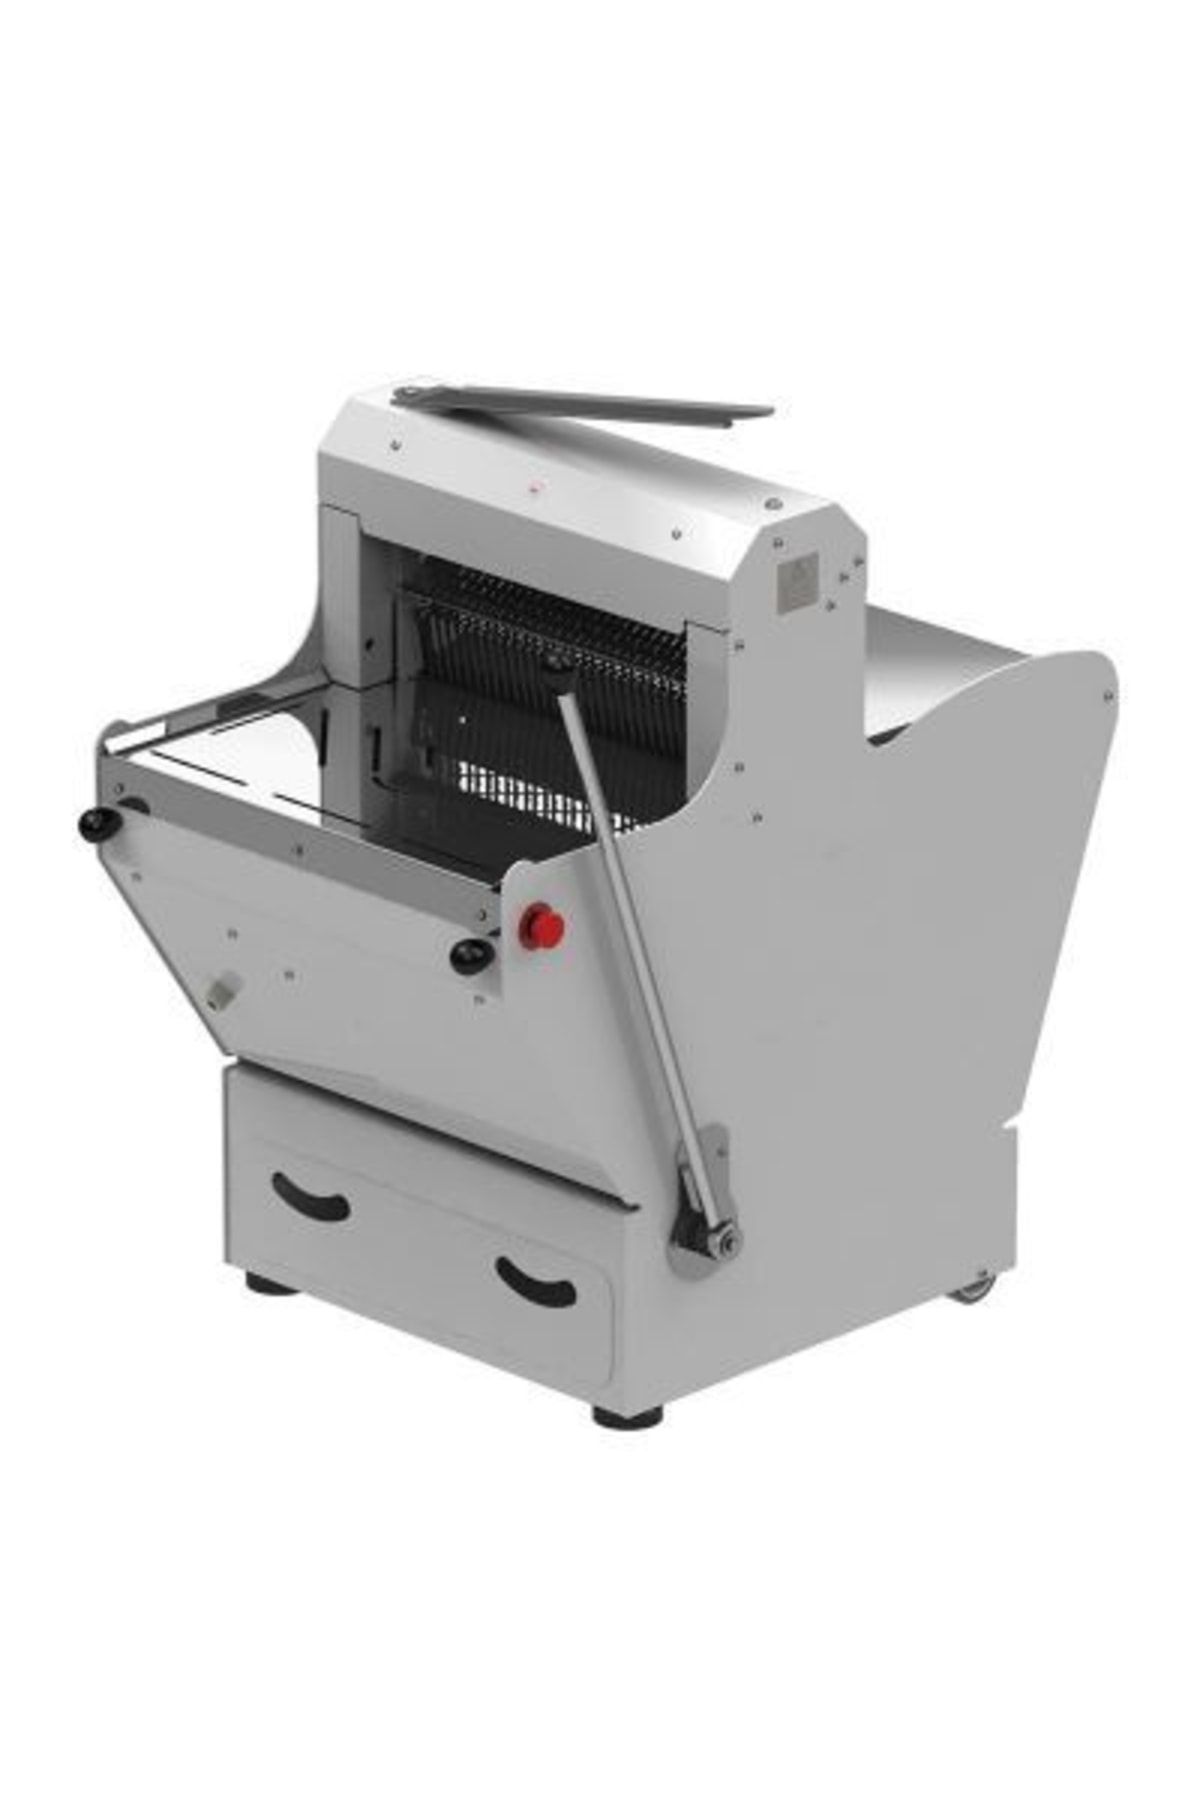 Mateka Dlm 990m Geniş Ekmek Dilimleme Makinesi, 220v